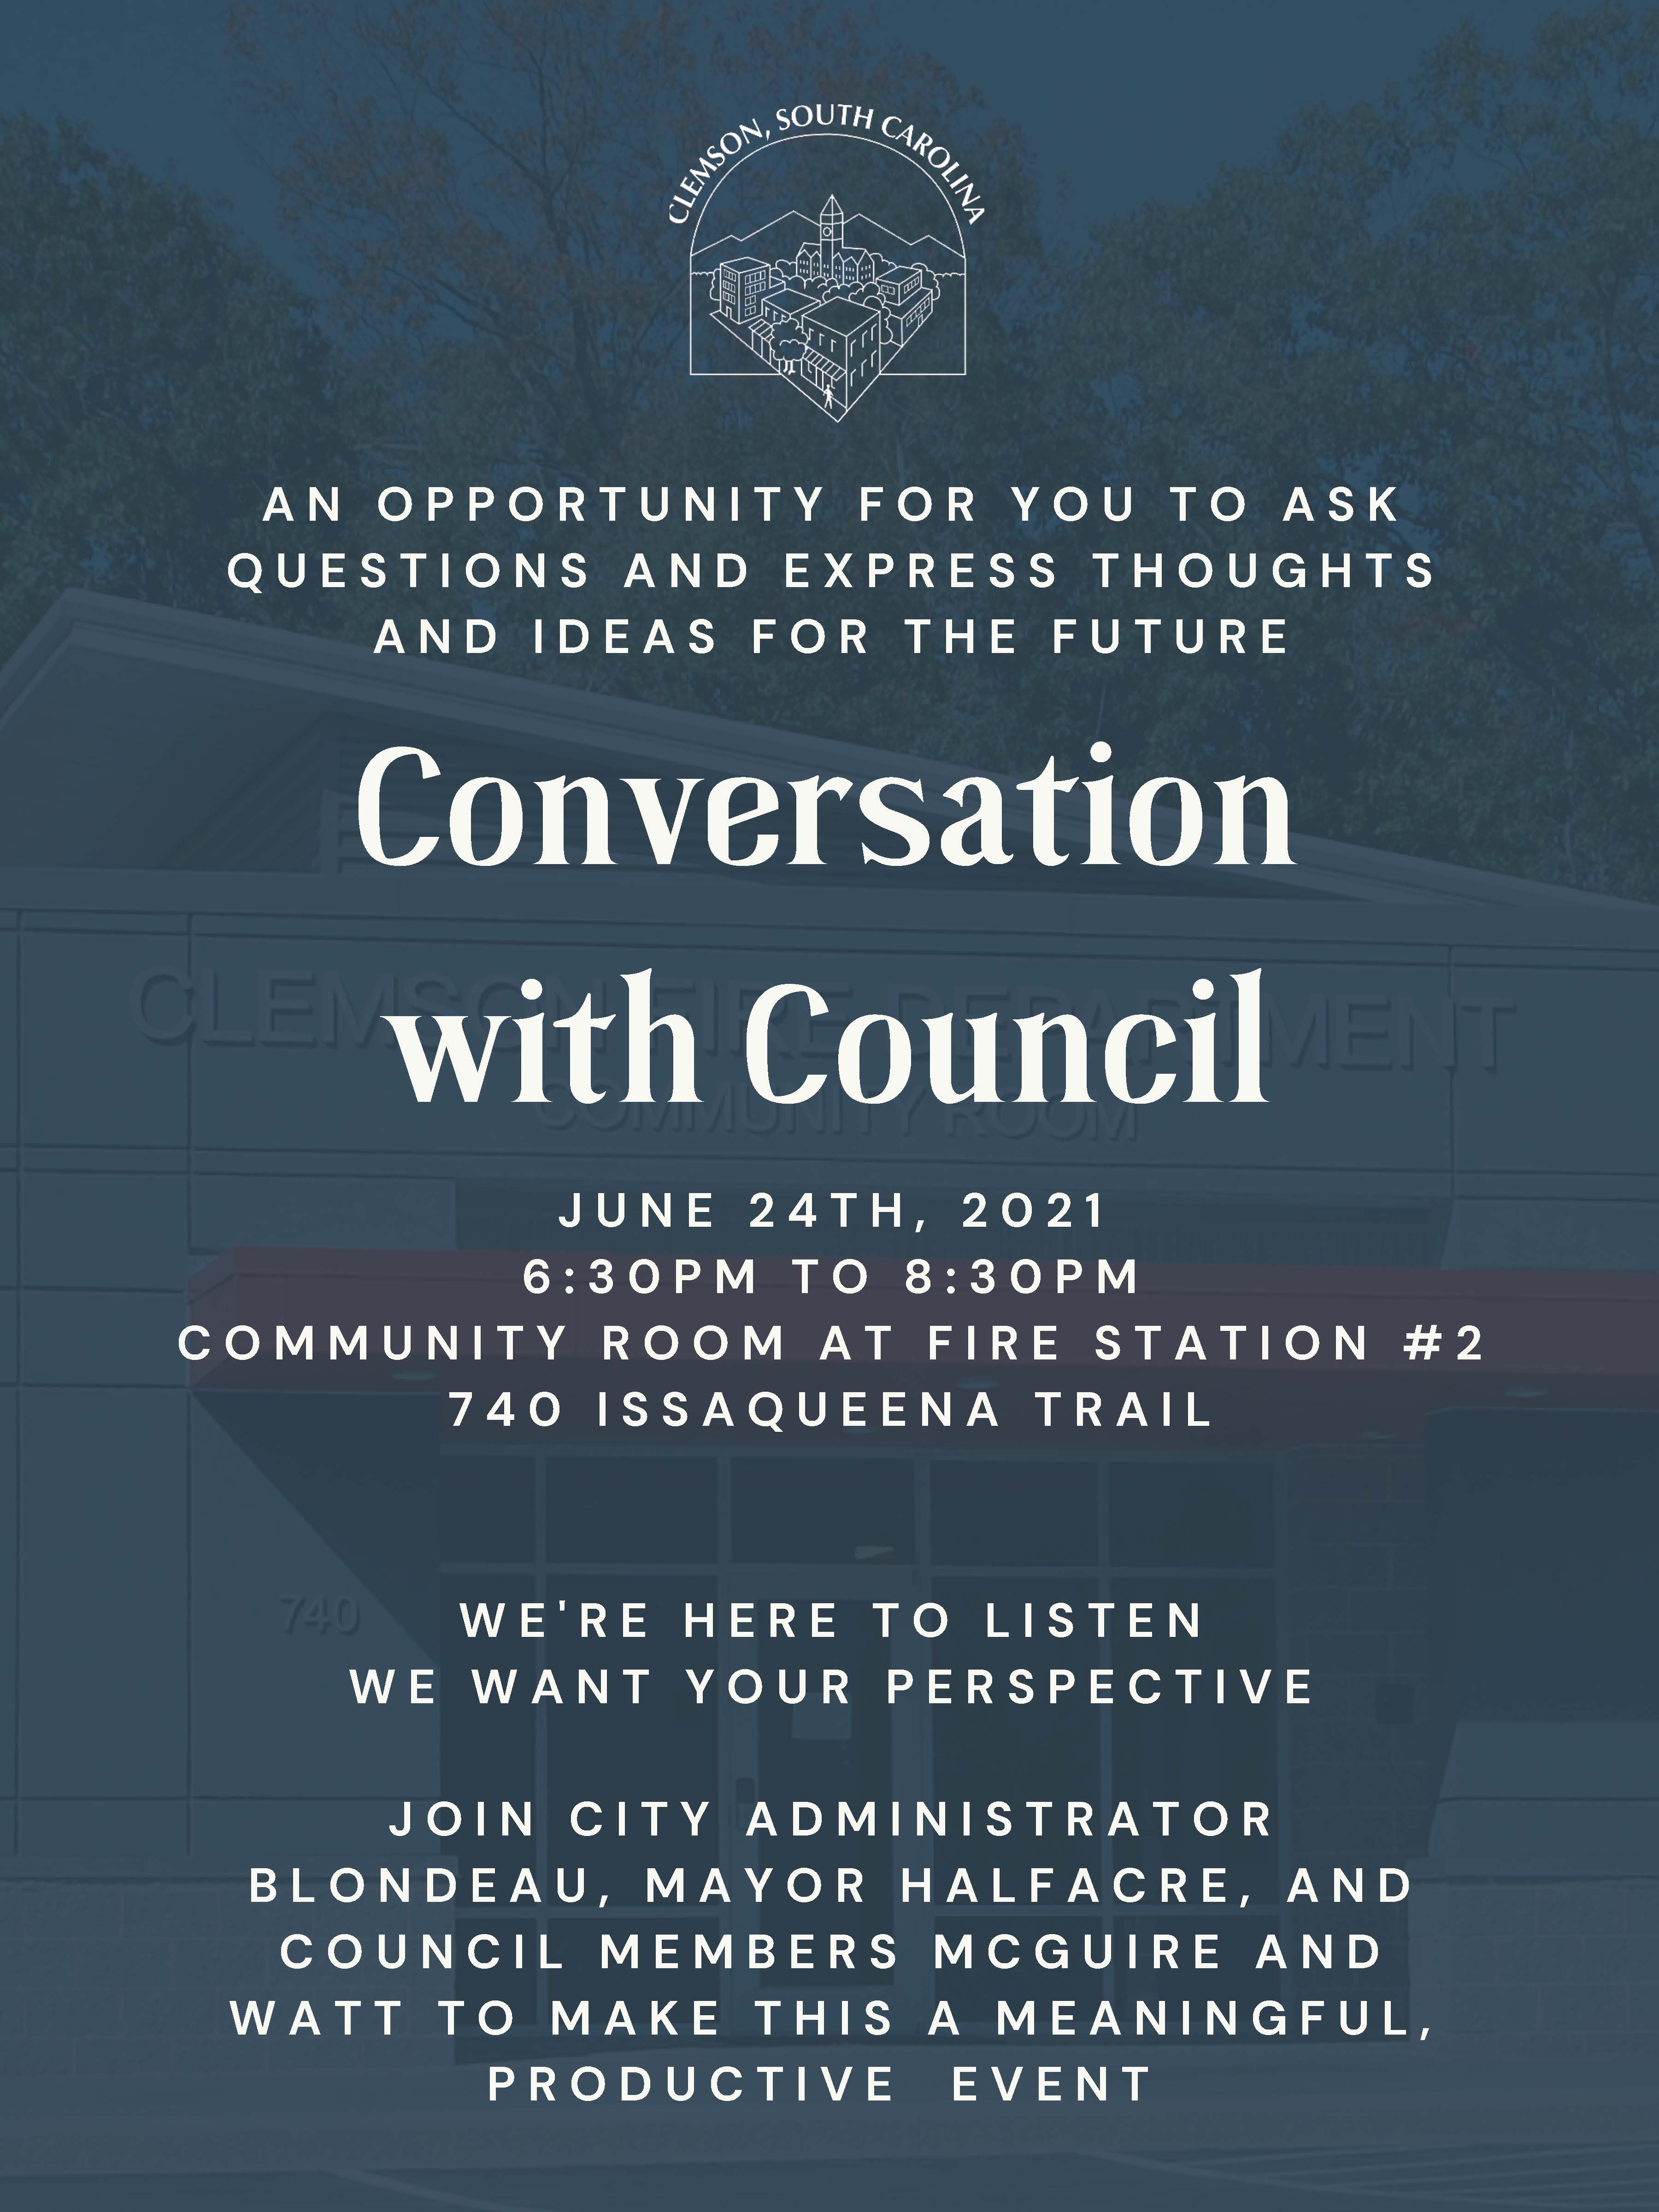 Conversations with Council June 24, 2021 City of Clemson South Carolina